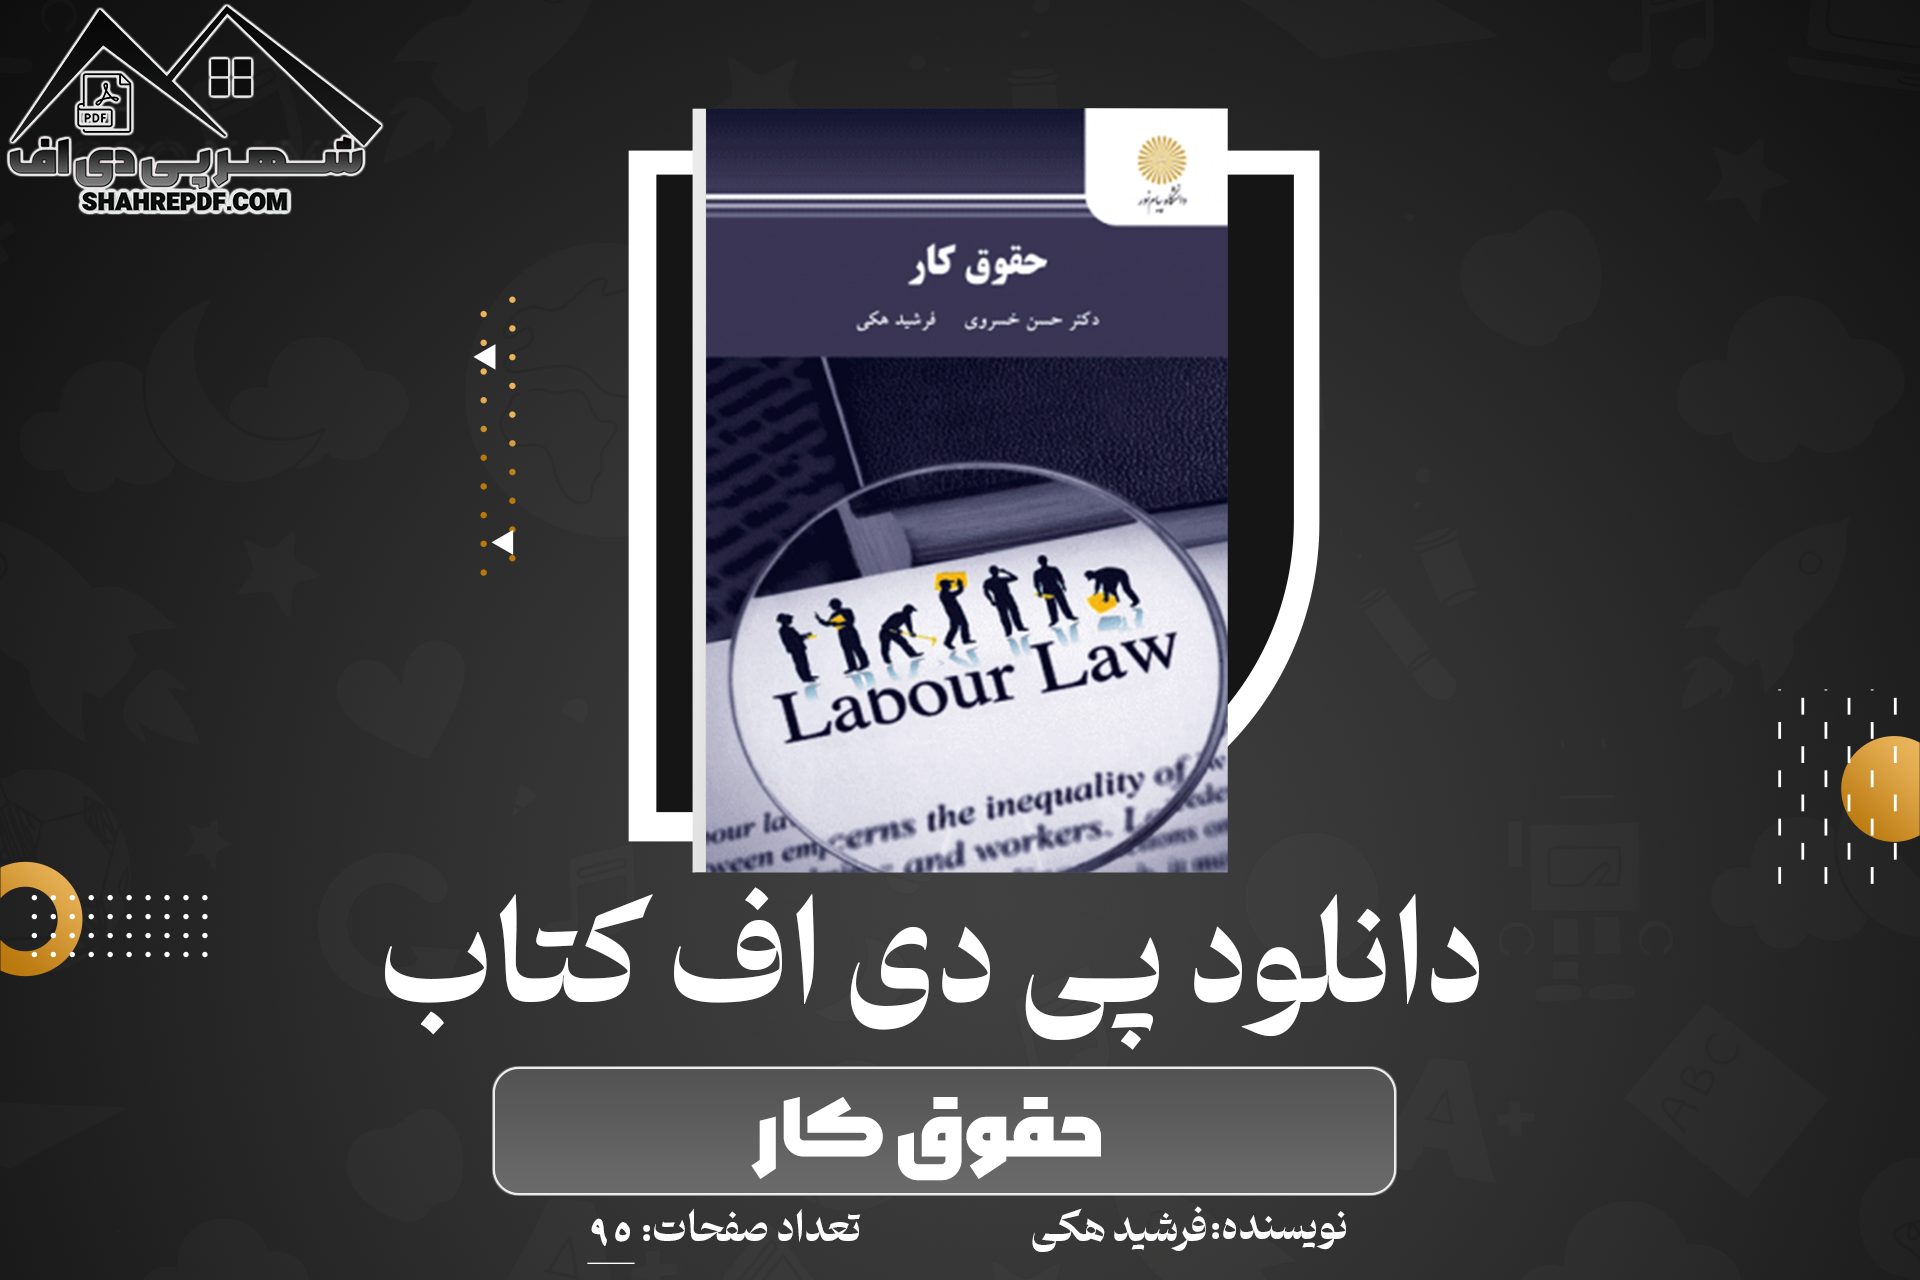 Download Farshid Heki's labor law book PDF